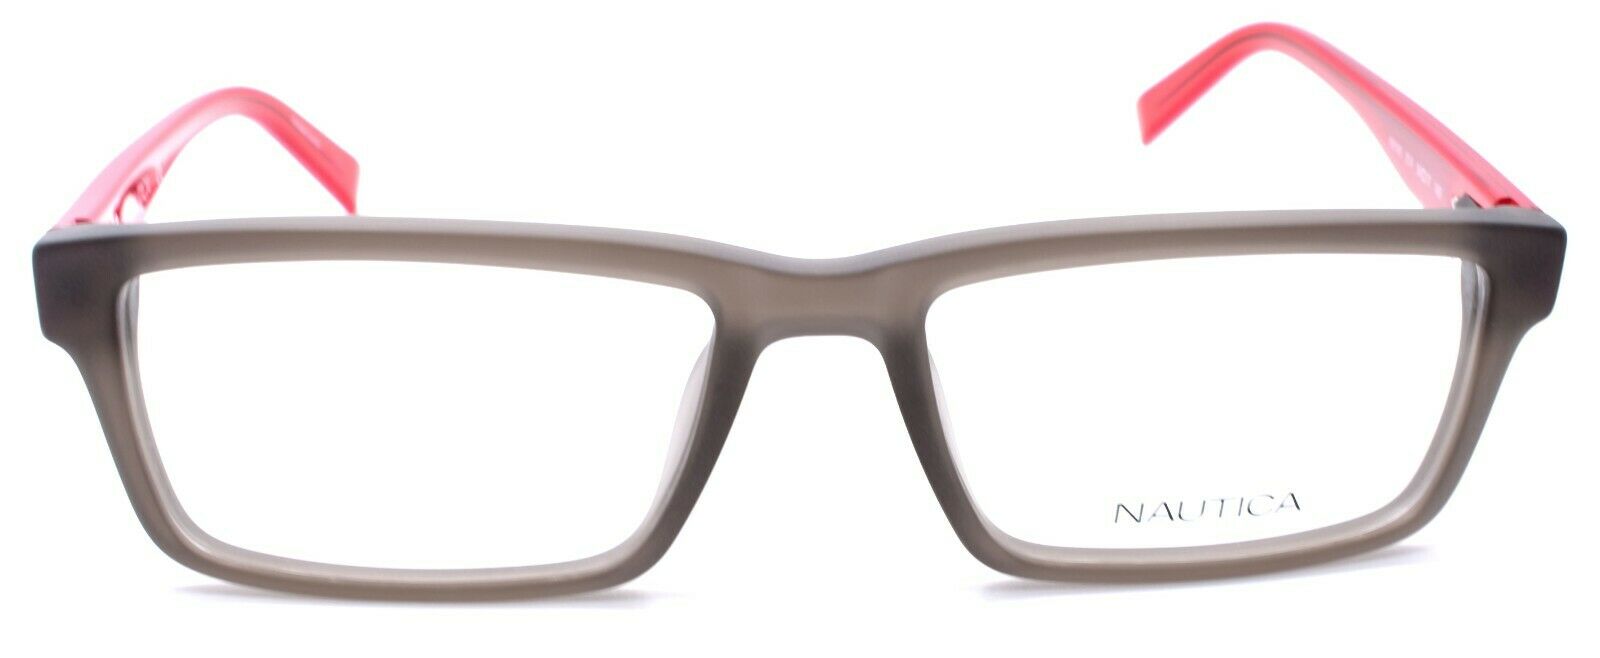 2-Nautica N8140 014 Men's Eyeglasses Frames 54-17-145 Matte Grey-688940459234-IKSpecs